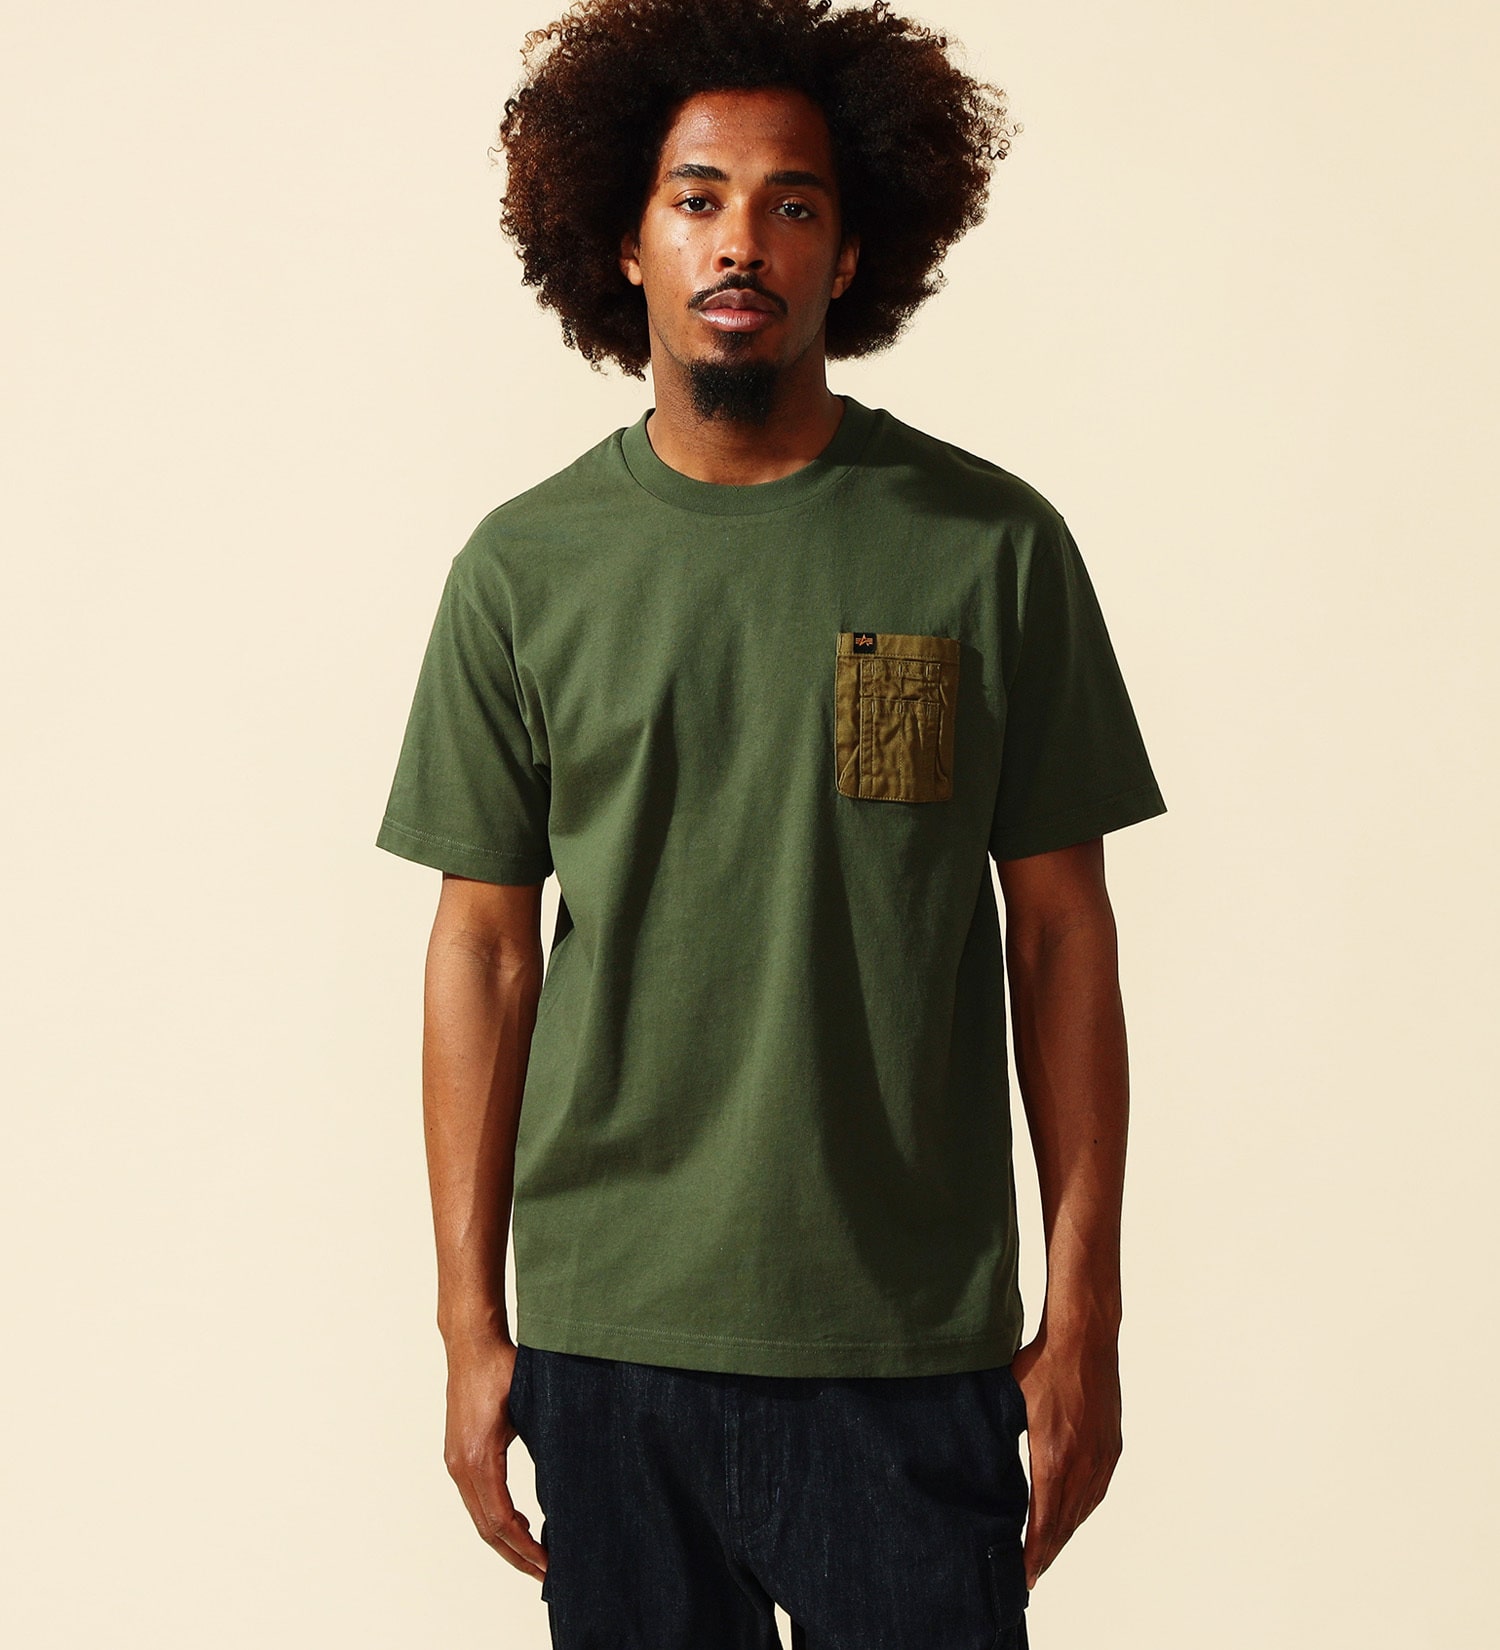 ALPHA(アルファ)のユーティリティーポケットTシャツ 半袖|トップス/Tシャツ/カットソー/メンズ|アーミー